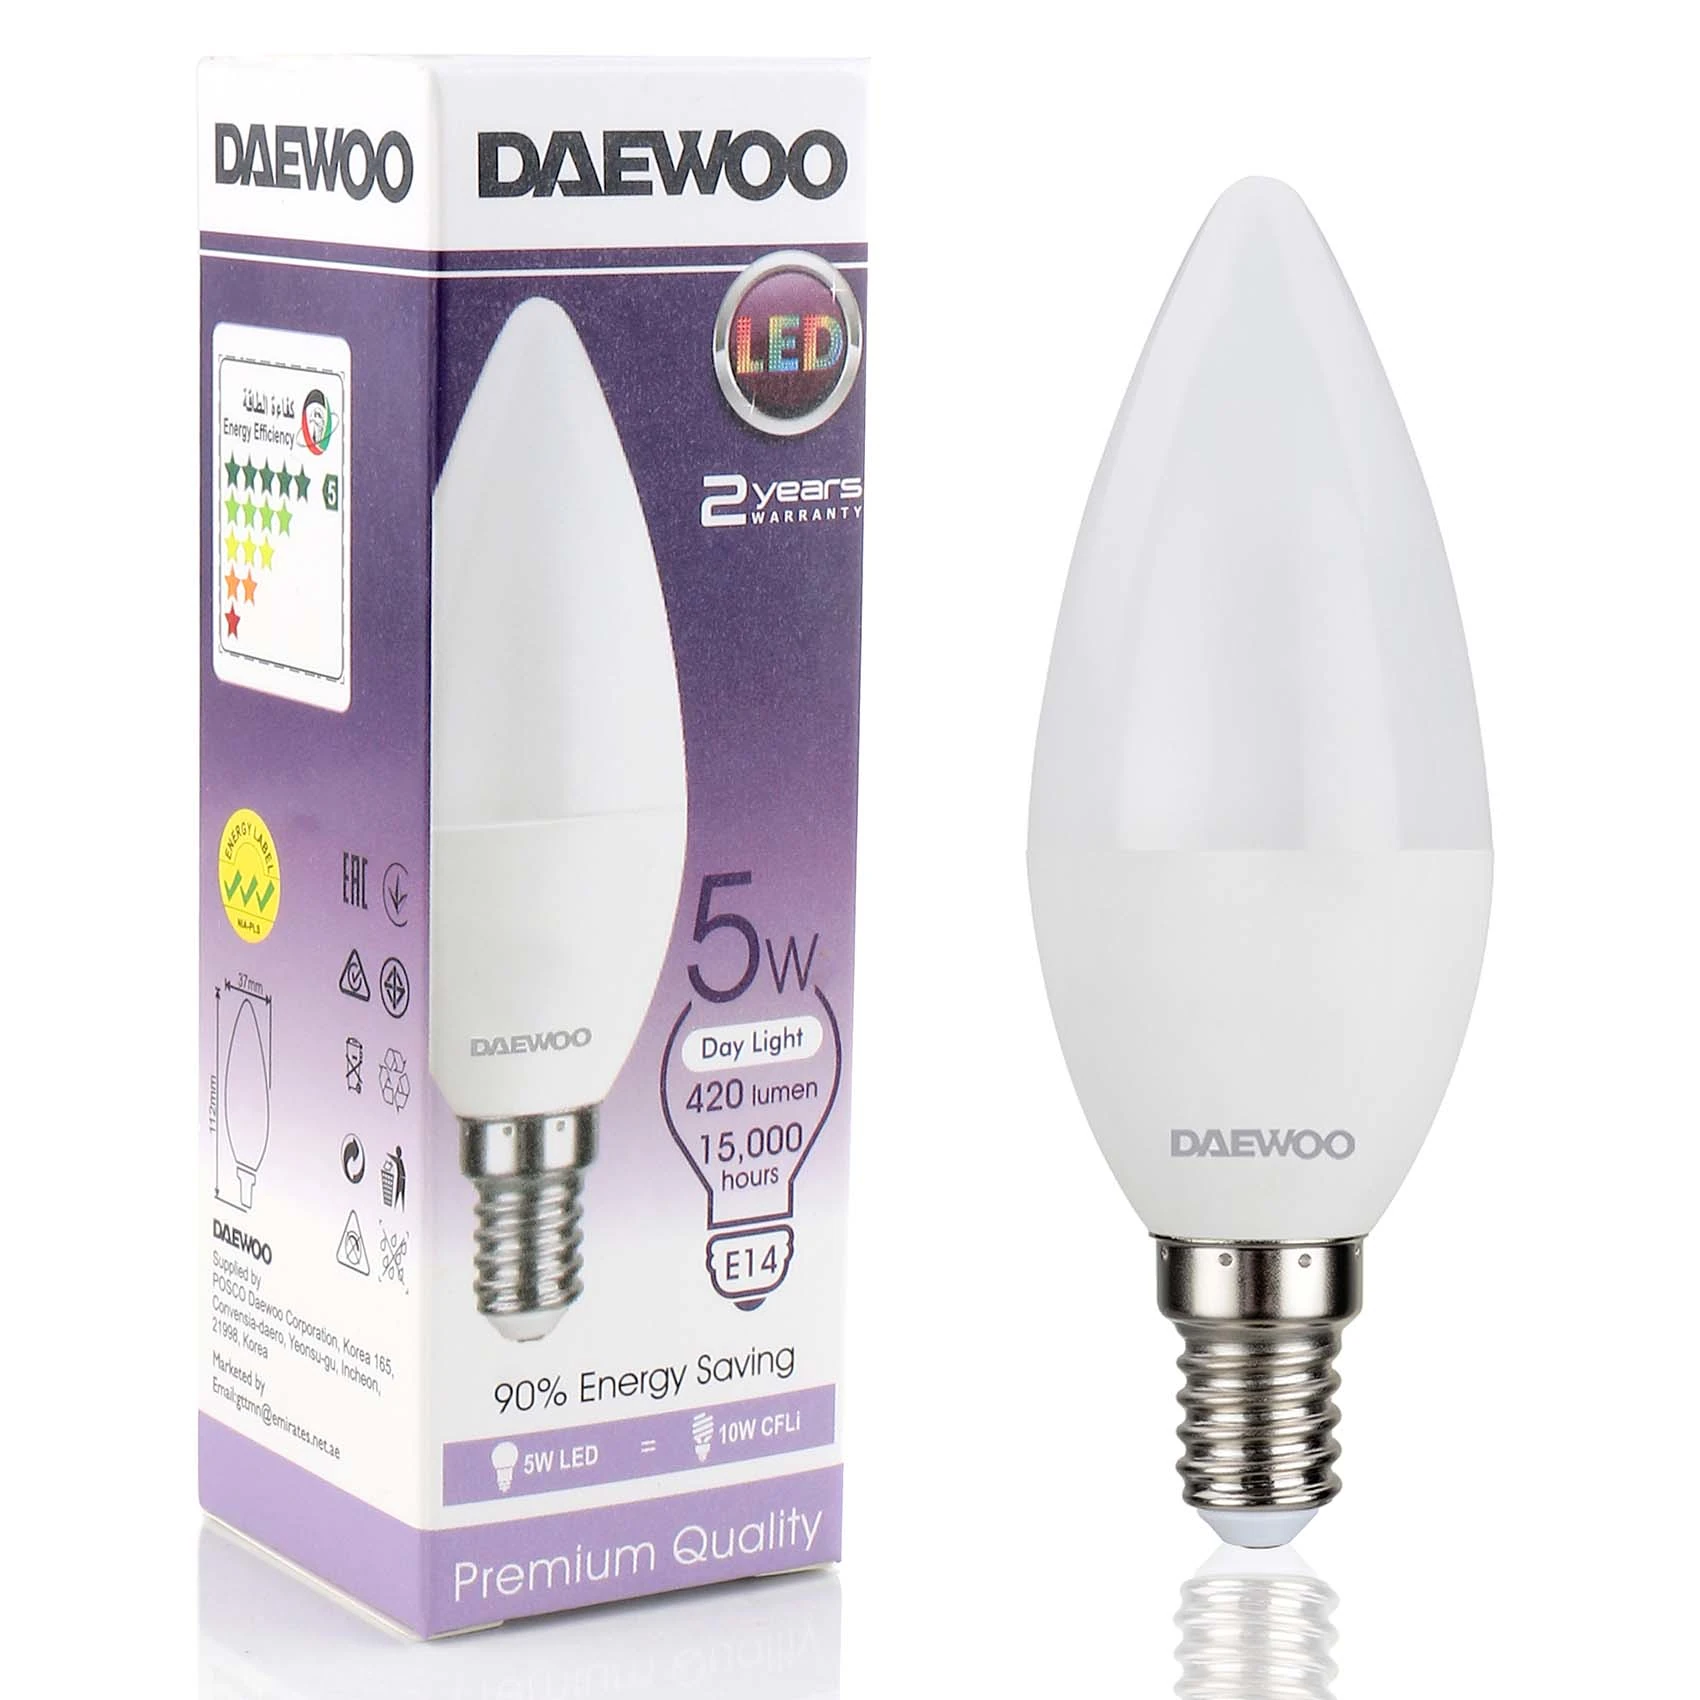 DAEWOO ENERGY SAVING LED CANDLE LIGHT E14-5W DL1405AN DAY LIGHT